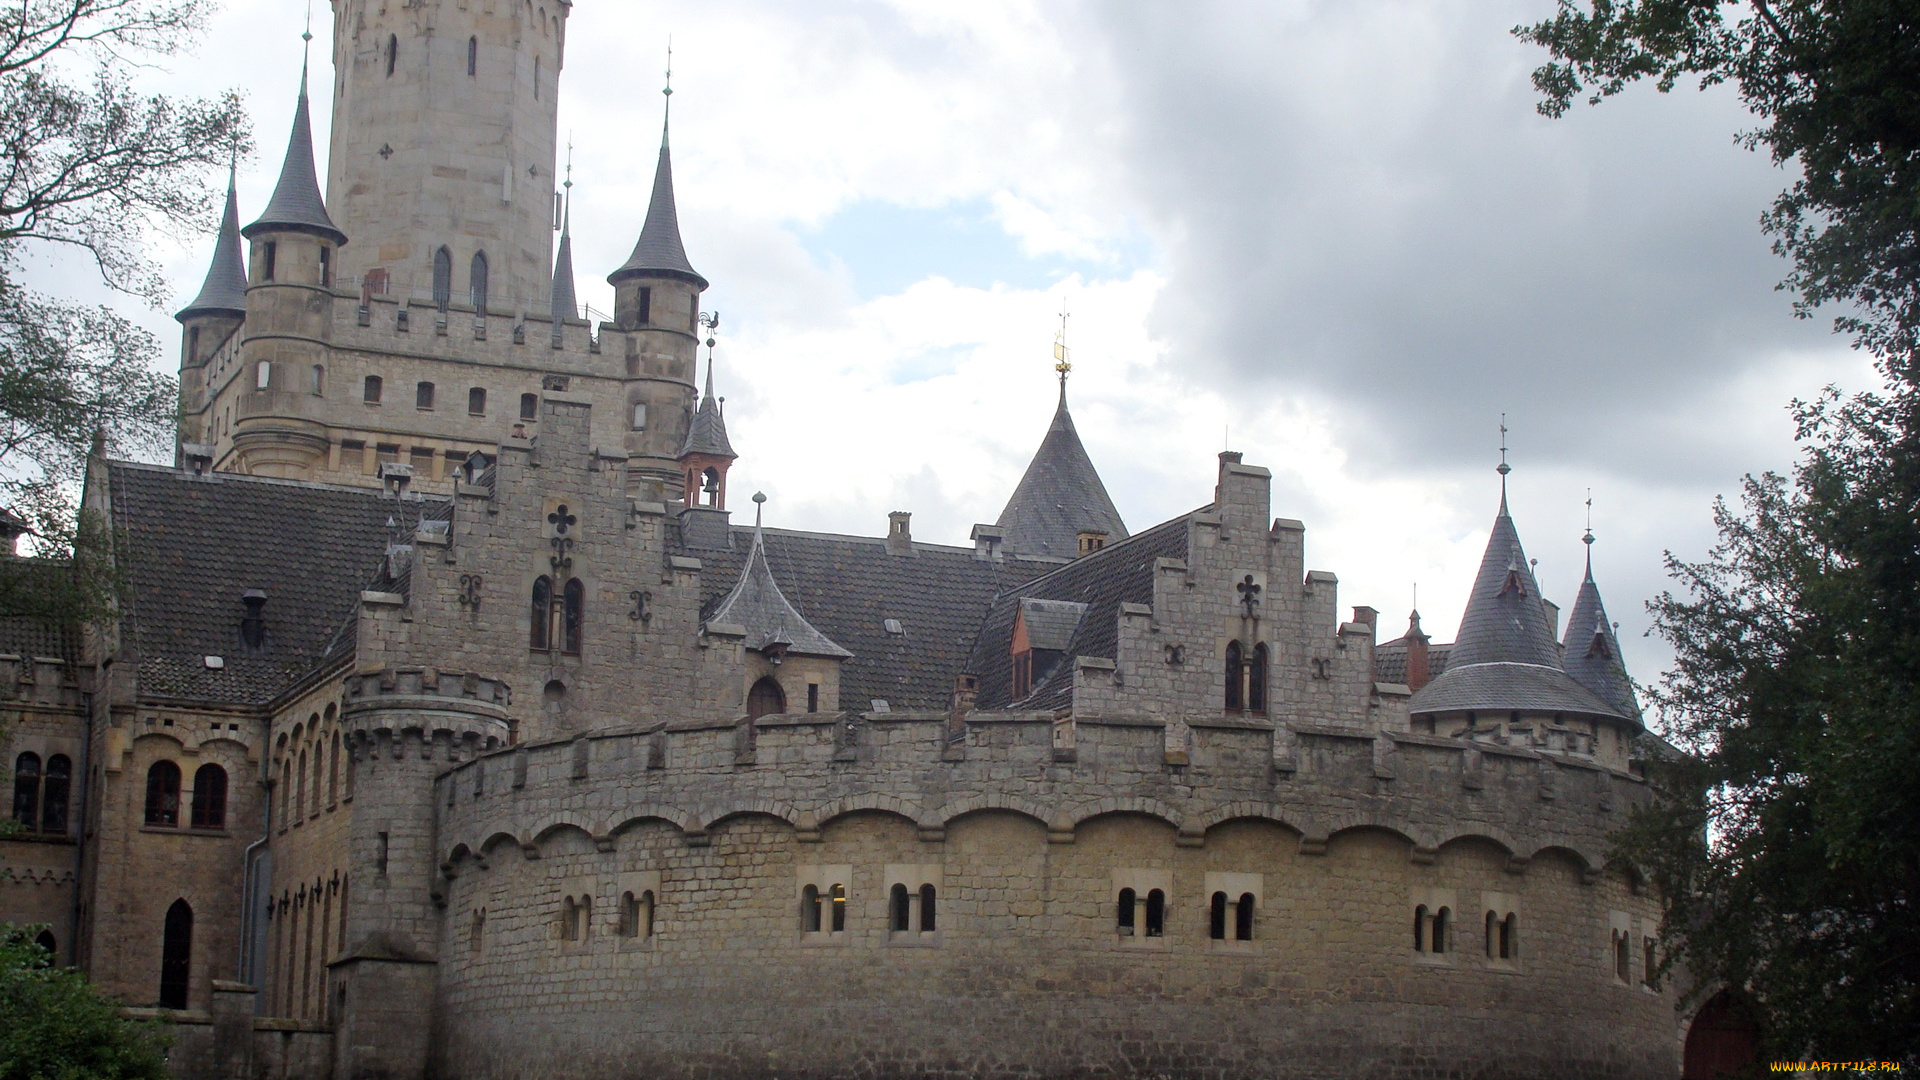 castle, marienburg, poland, города, дворцы, замки, крепости, замок, стены, башни